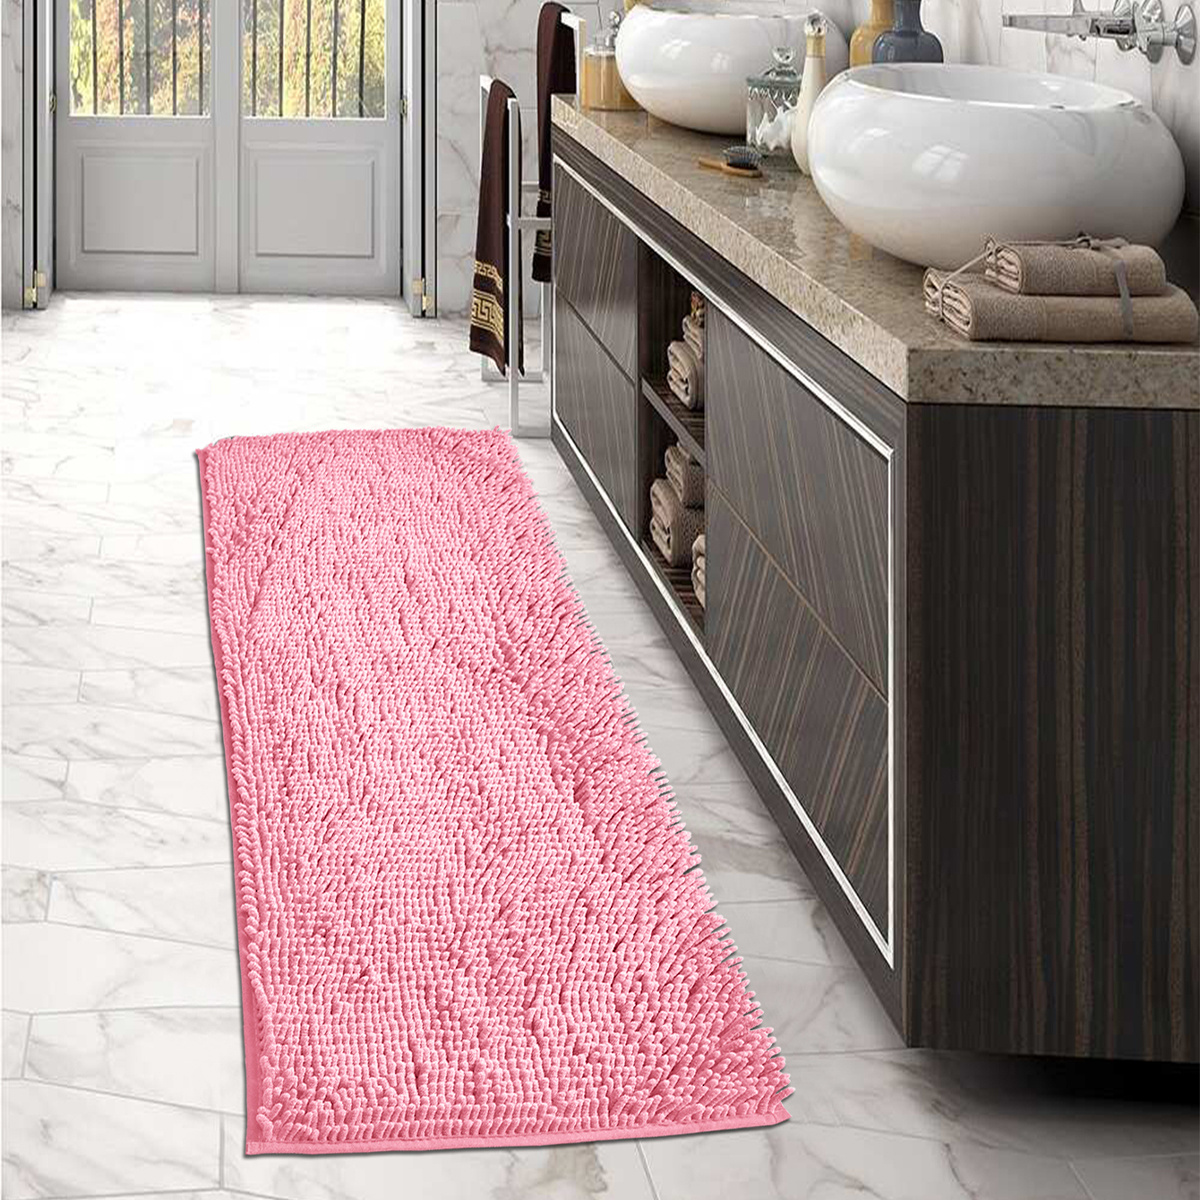 Absorbent Soft Bath Mat Bathroom Shower Rug Floor Carpet Non Slip 15 x23  Inches